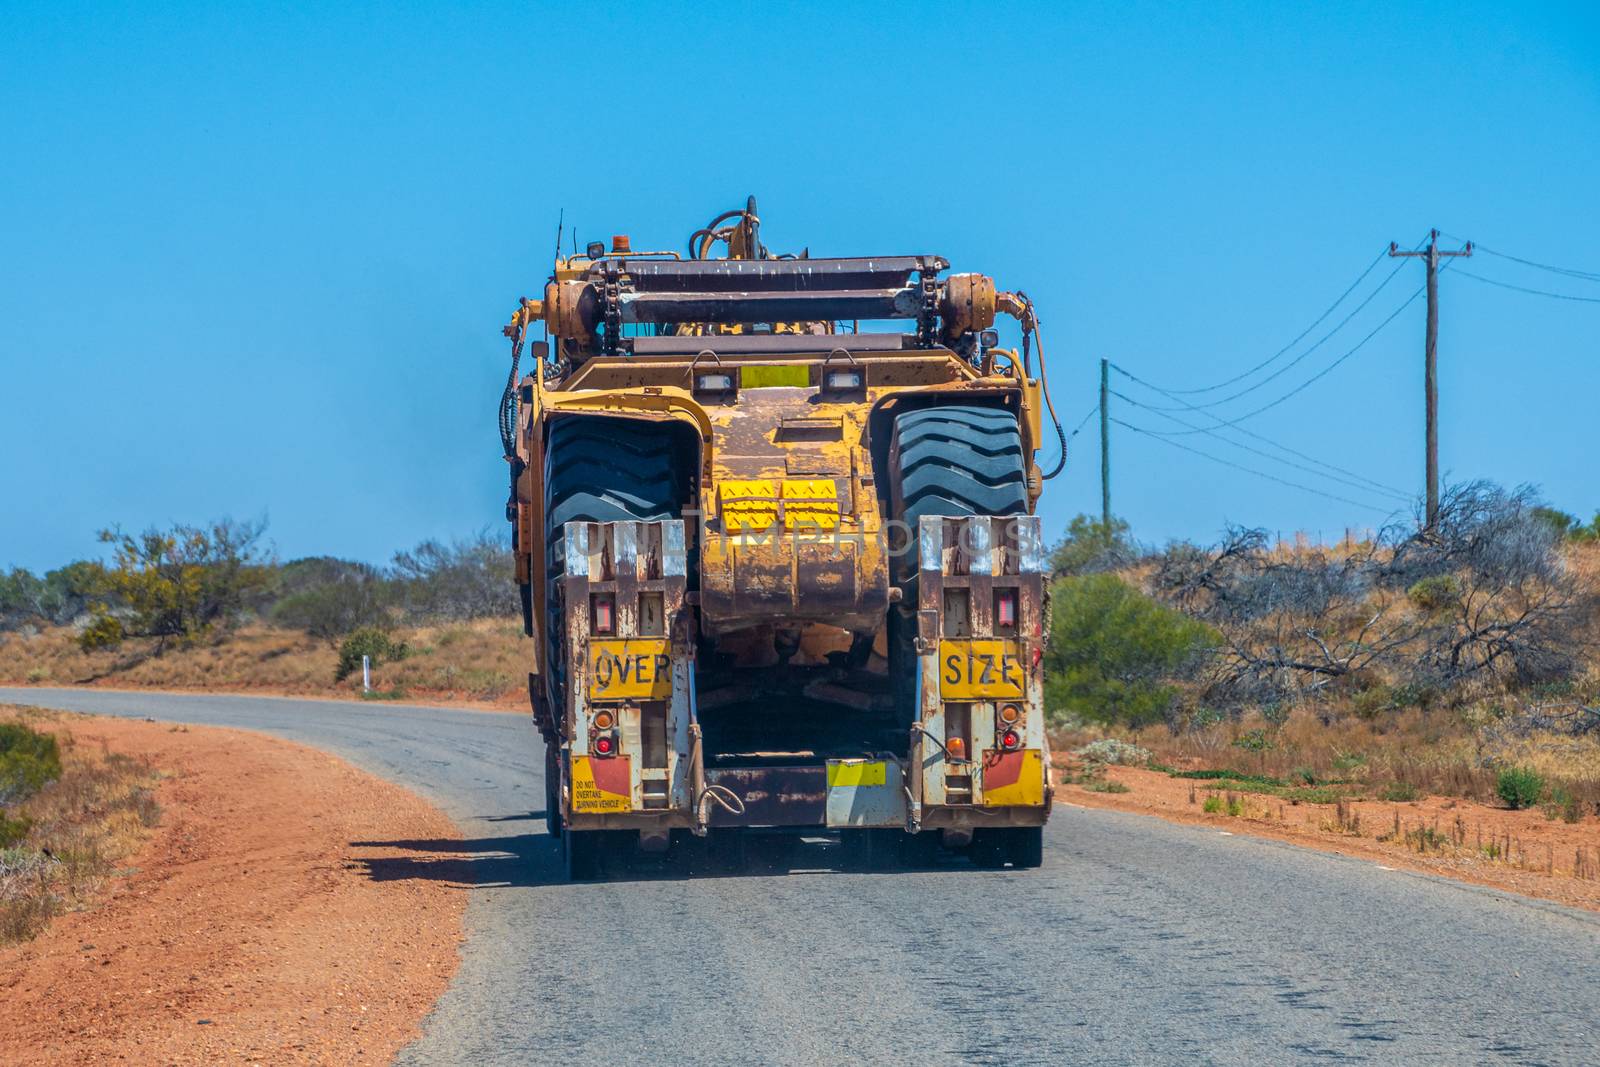 Road Train oversize load transport in Australia transporting big mining equipment by MXW_Stock